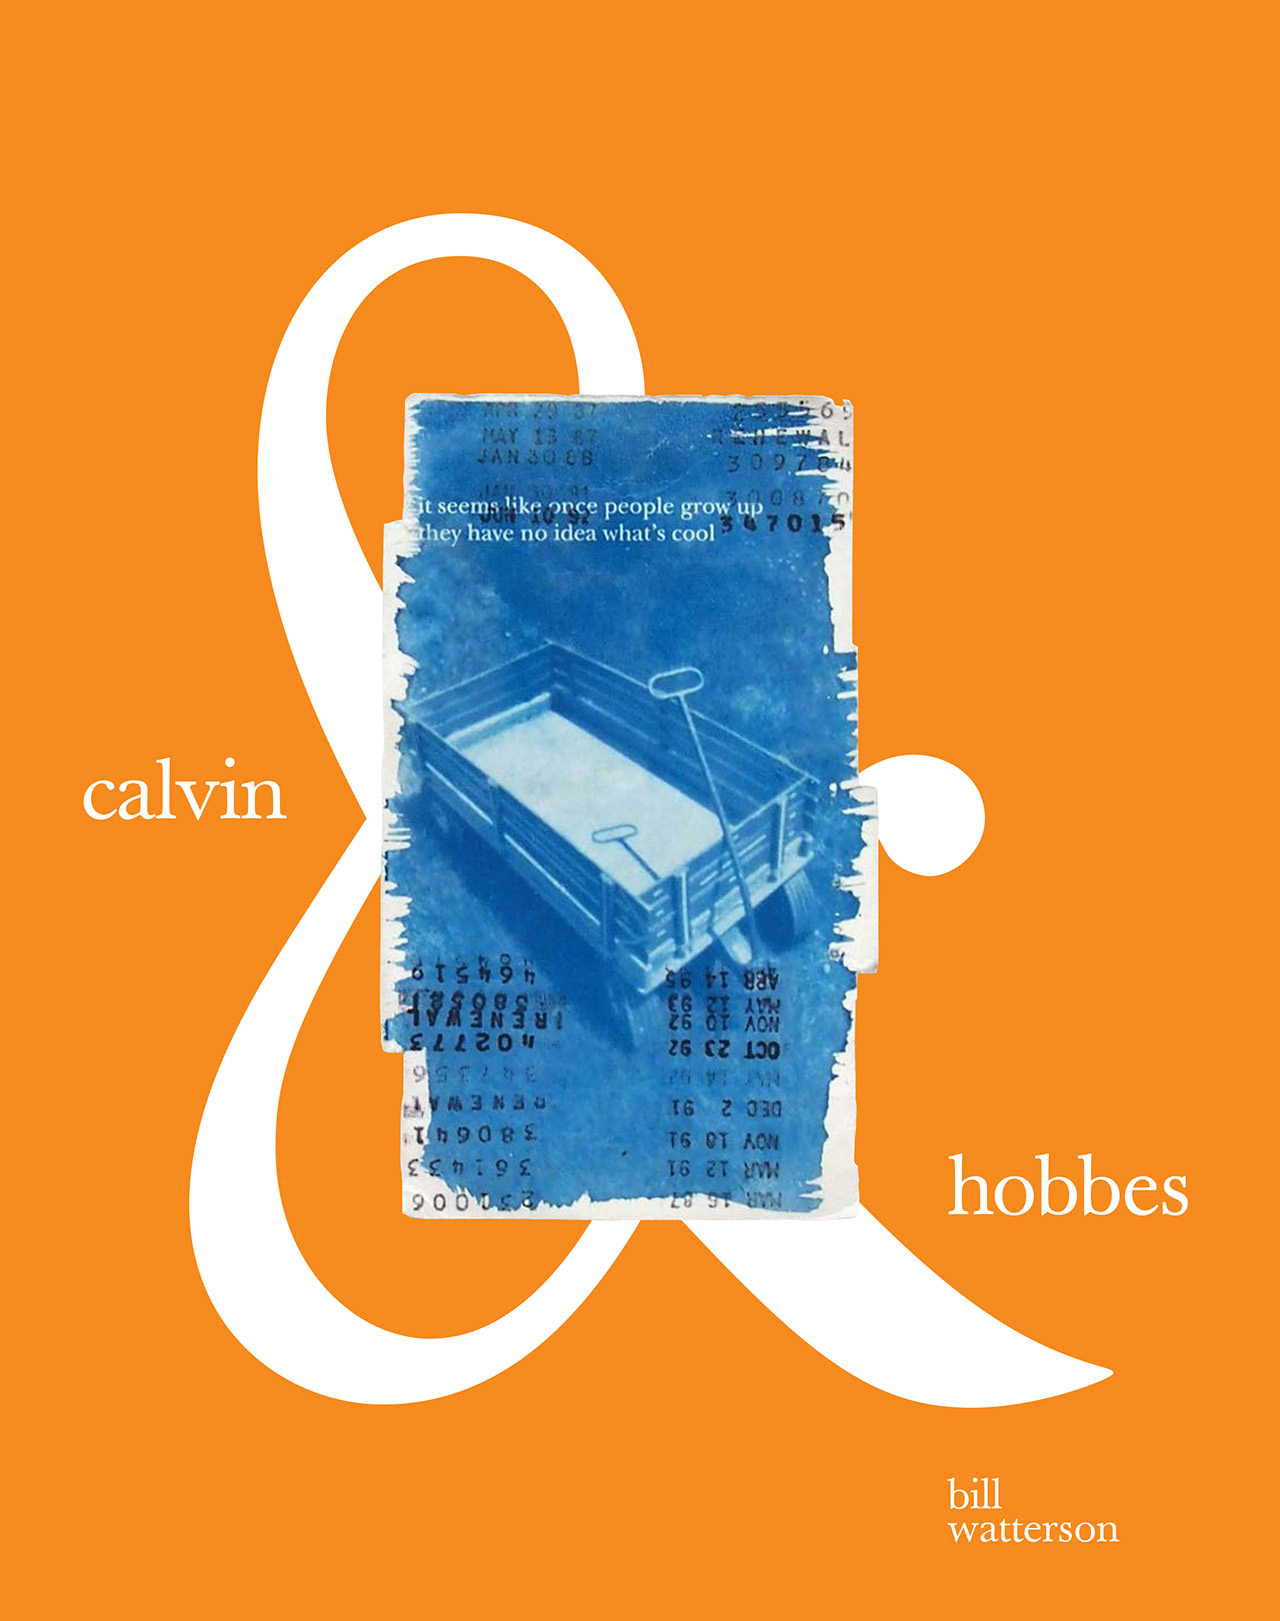 Ryan Shelley | "Calvin & Hobbes" by Bill Watterson